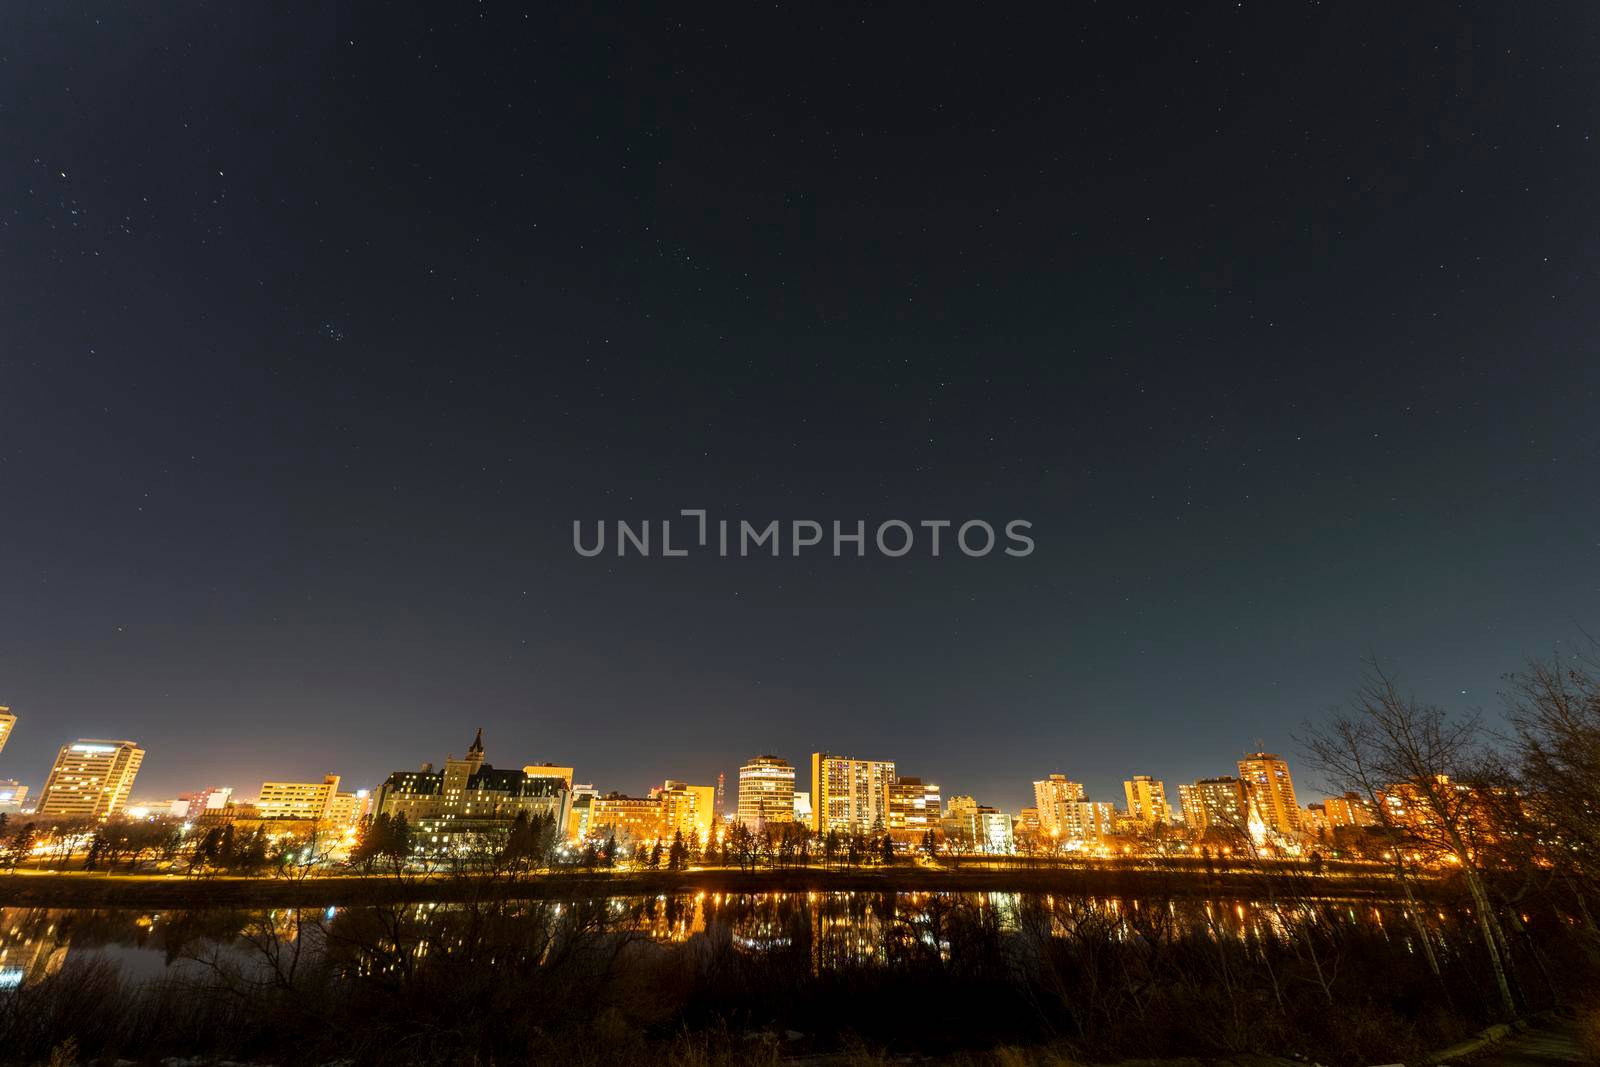 Moonlit Night Photo Saskatoon by pictureguy